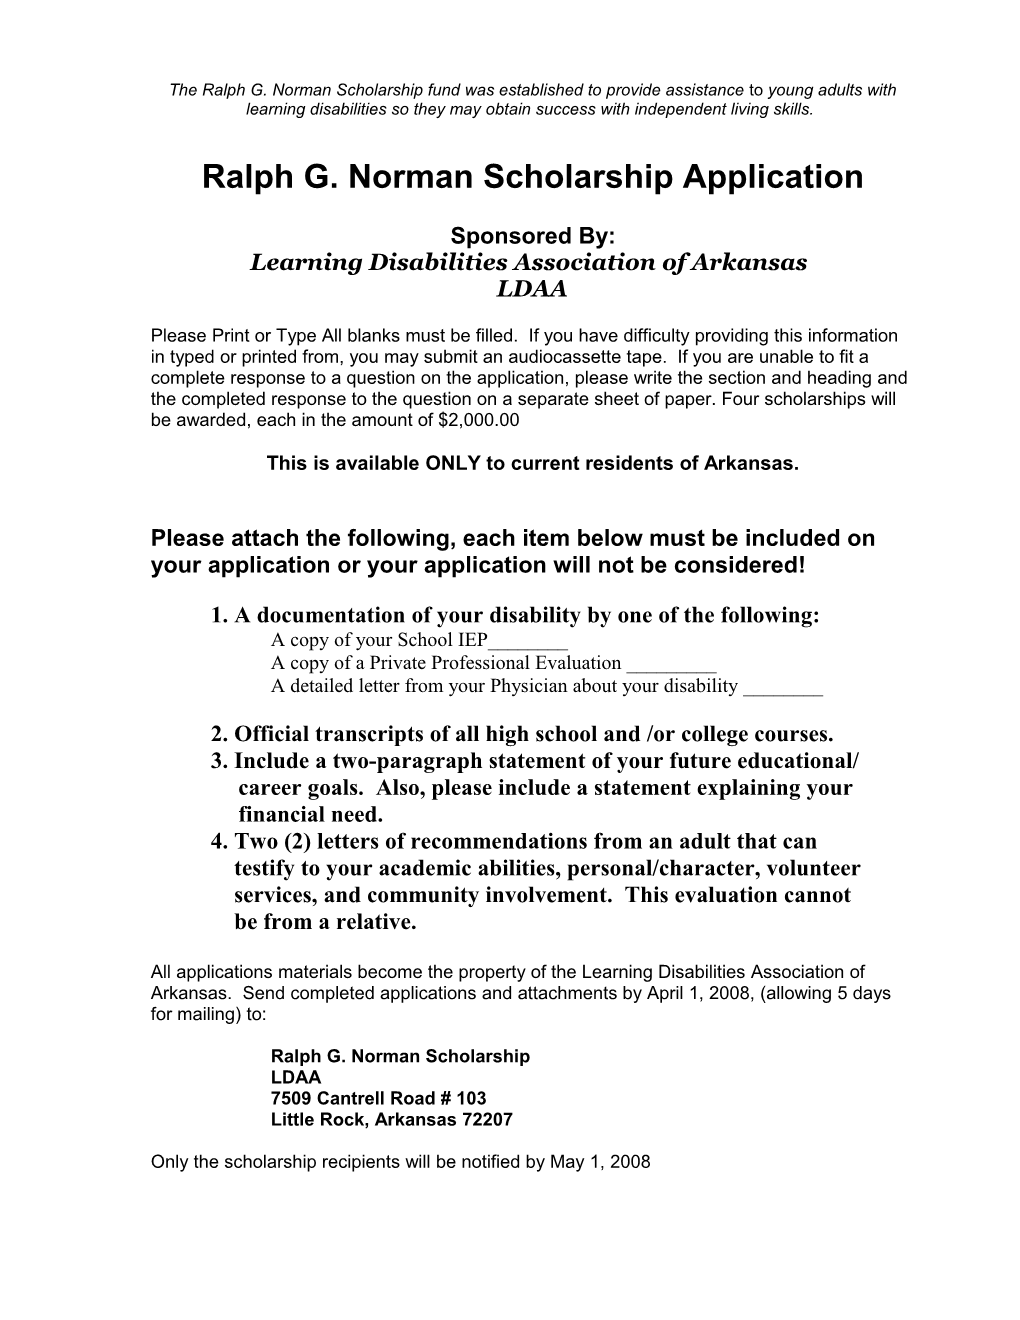 Ralph G. Norman Scholarship Application